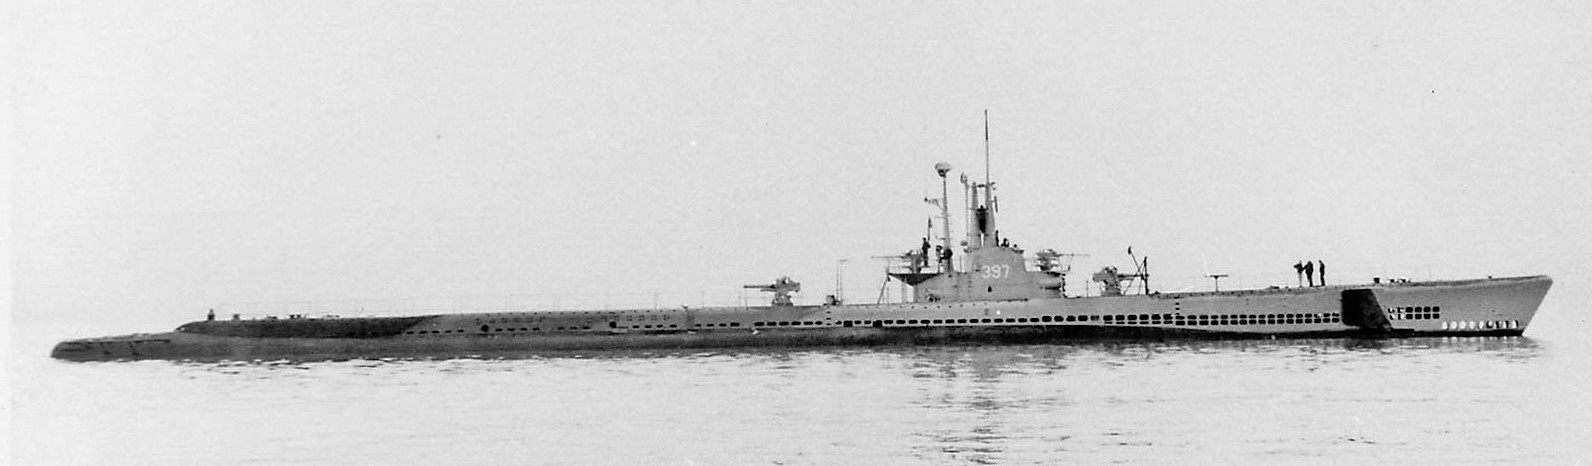 s 86 hs triania ss 397 uss scabbardfish submarine hellenic navy